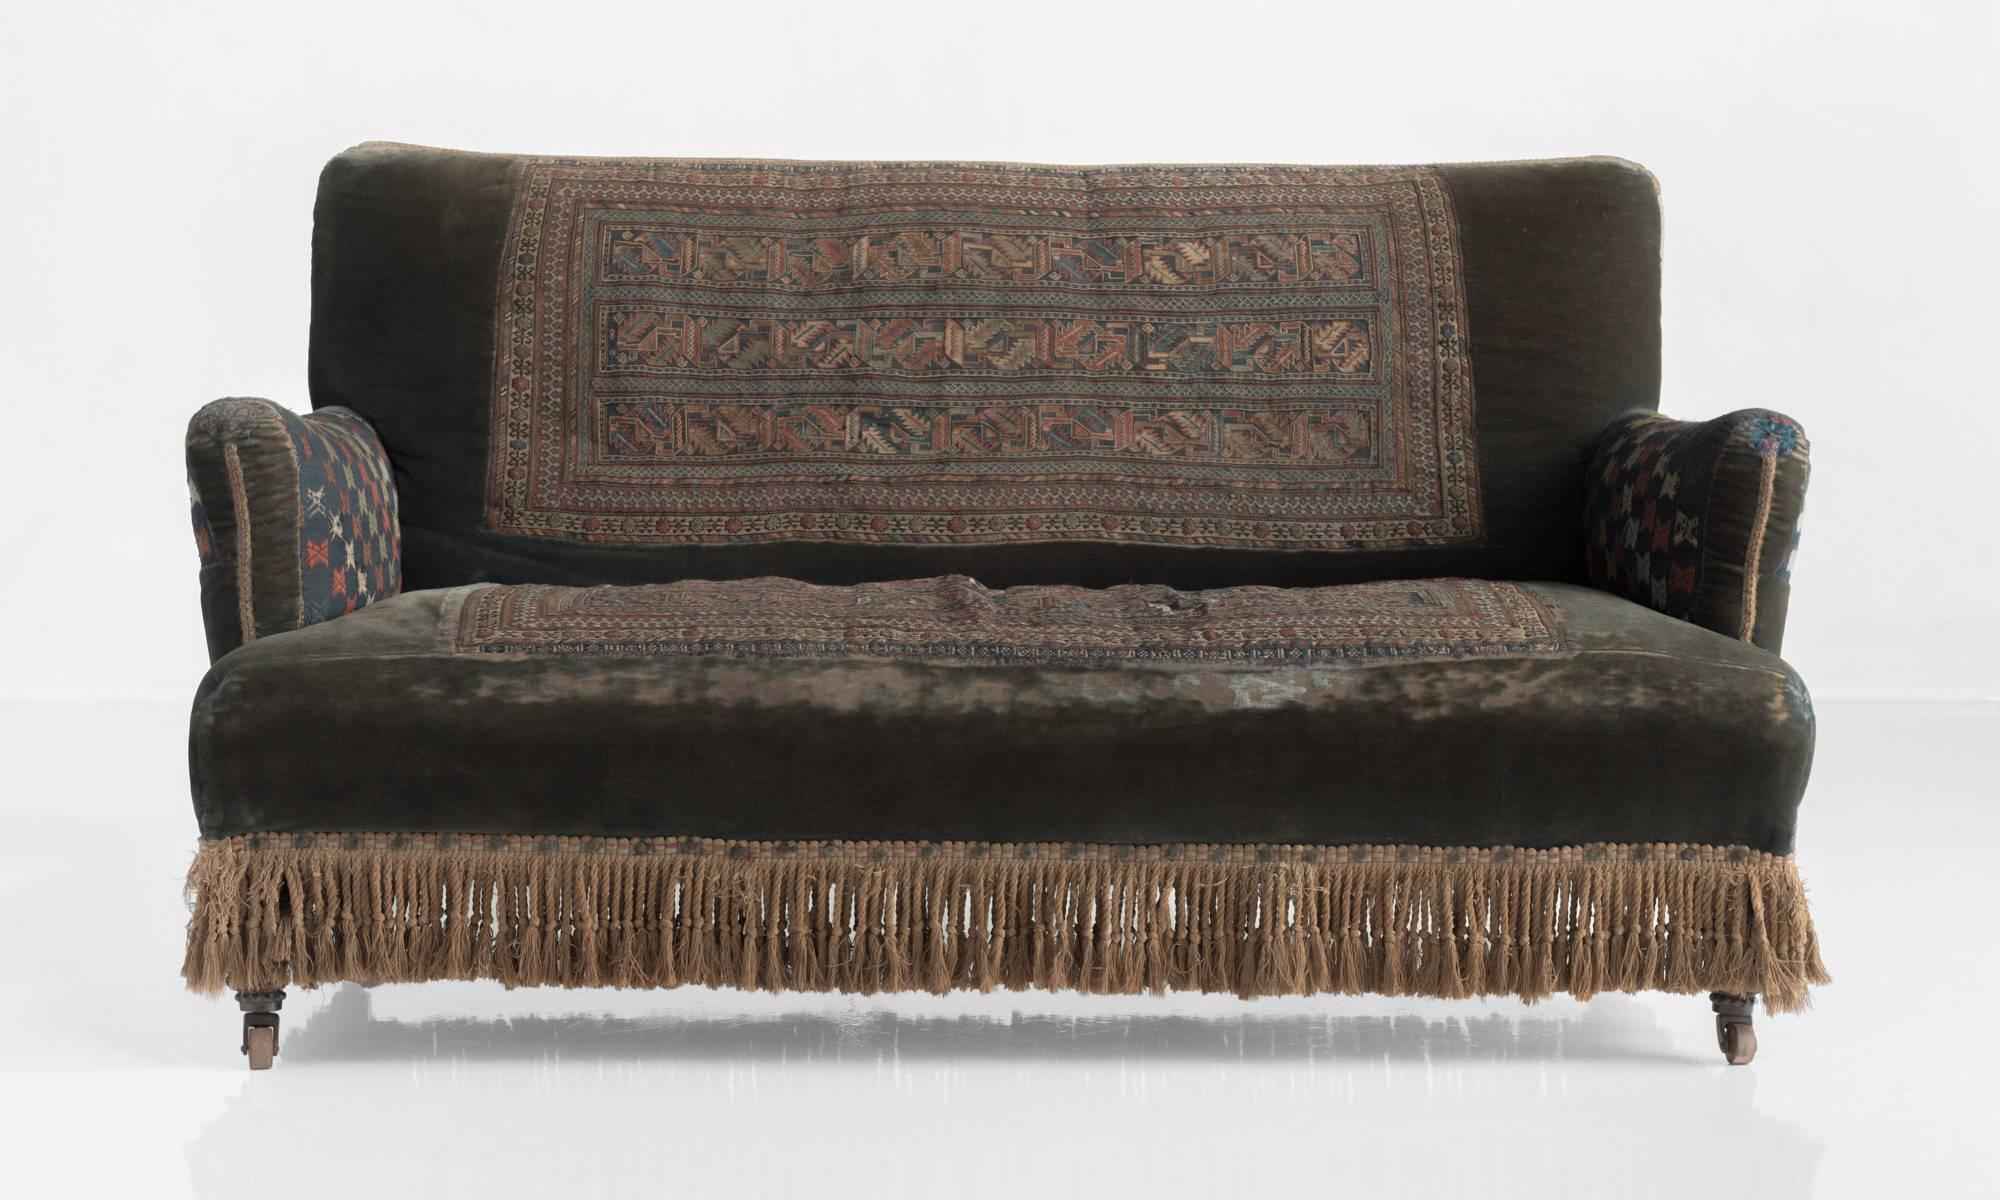 Kilim Sofa, England, circa 1890

Original velvet and kilim upholstery with braided tassels. Makes stamp underneath.

Measure: 62.5